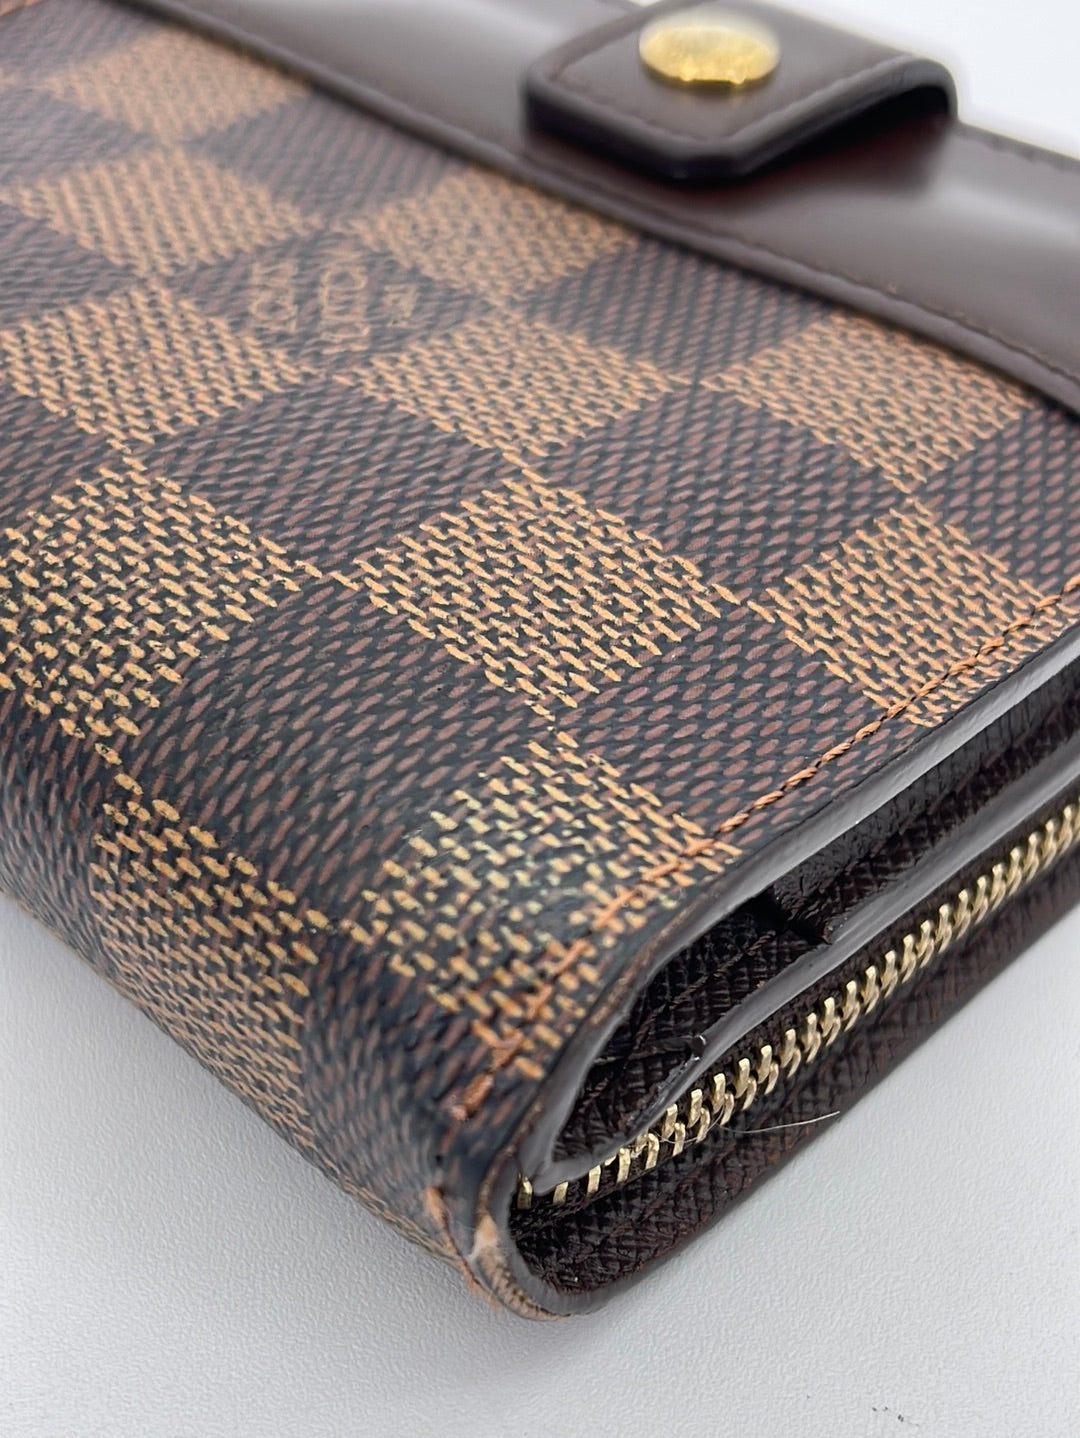 PRE LOVED] Louis Vuitton Victorine Wallet in Damier Ebene Canvass Cer